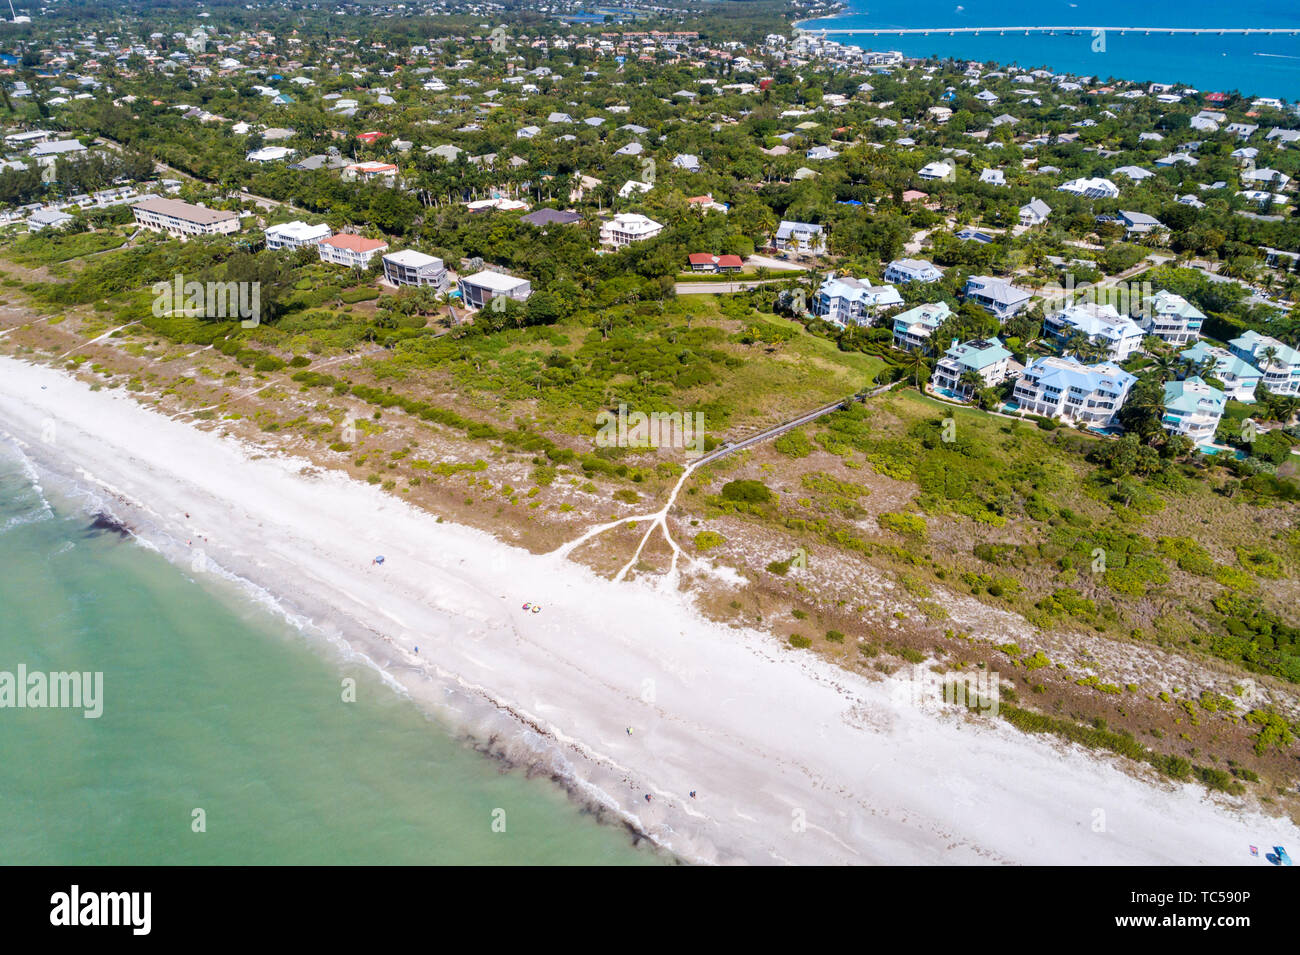 Sanibel Island Florida, playas del Golfo de México, casas en East Gulf Drive, Colony Beach Estates, Kinzie, Sanibel Causeway Bridge, aves aéreas Foto de stock